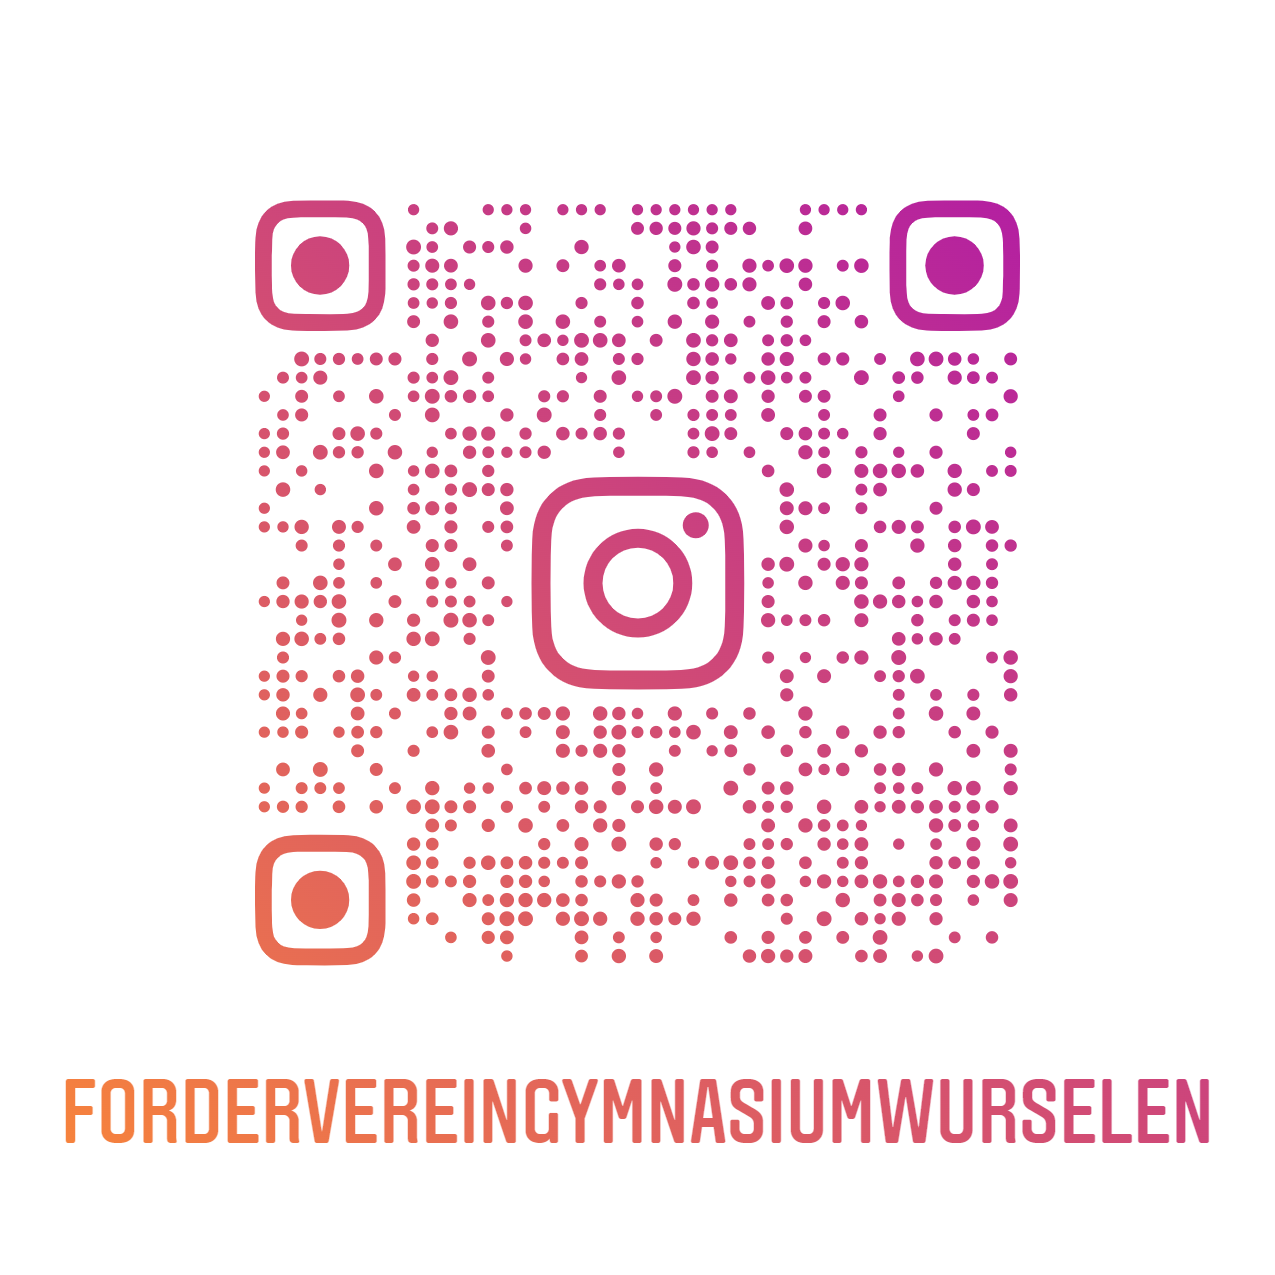 https://www.instagram.com/fordervereingymnasiumwurselen/